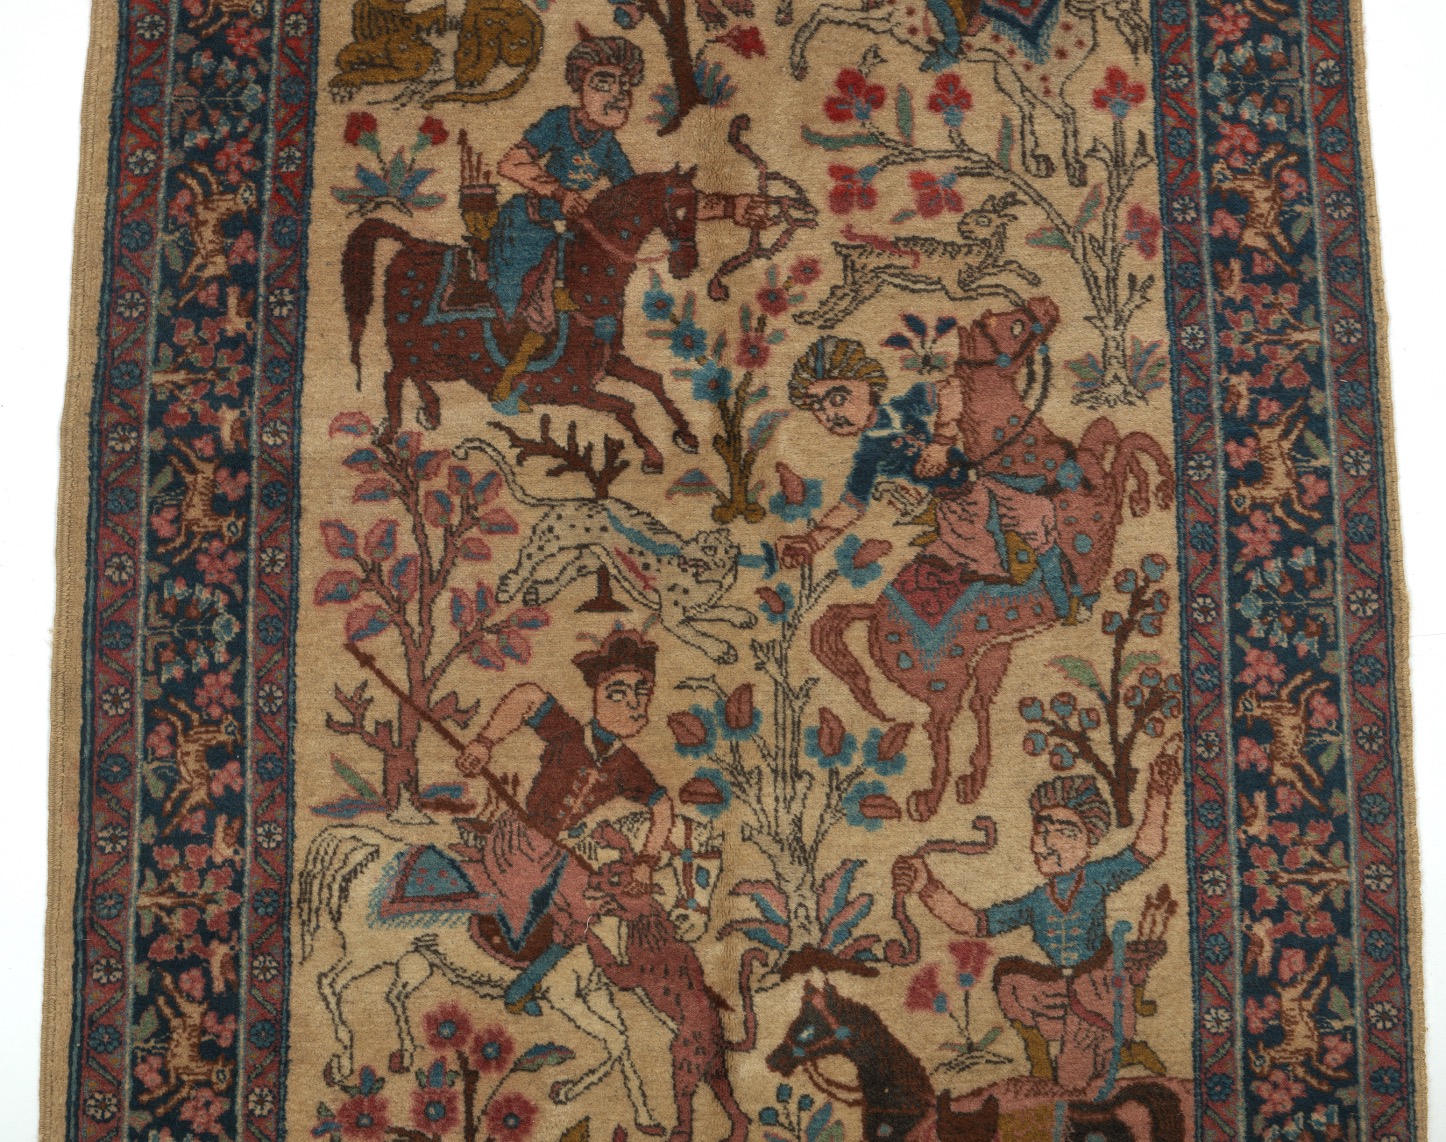 Tabriz Pictorial Hunting Carpet after 16th Century Safavid Design, ca. 1920's - Image 3 of 5